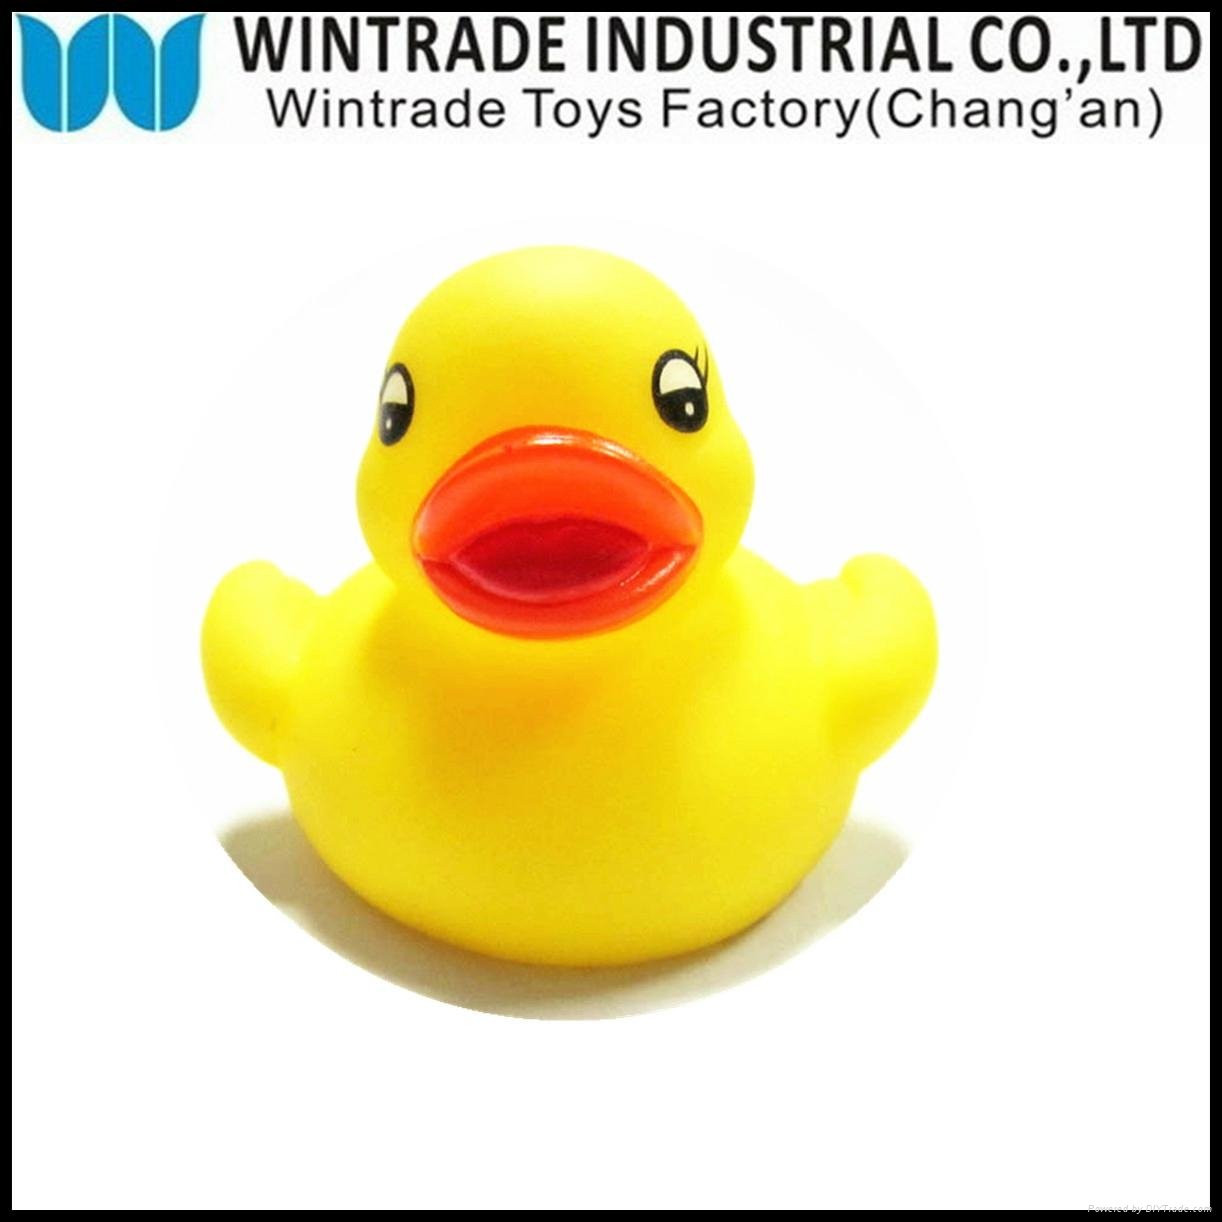 PVC bath rubber duck toy for kids 2